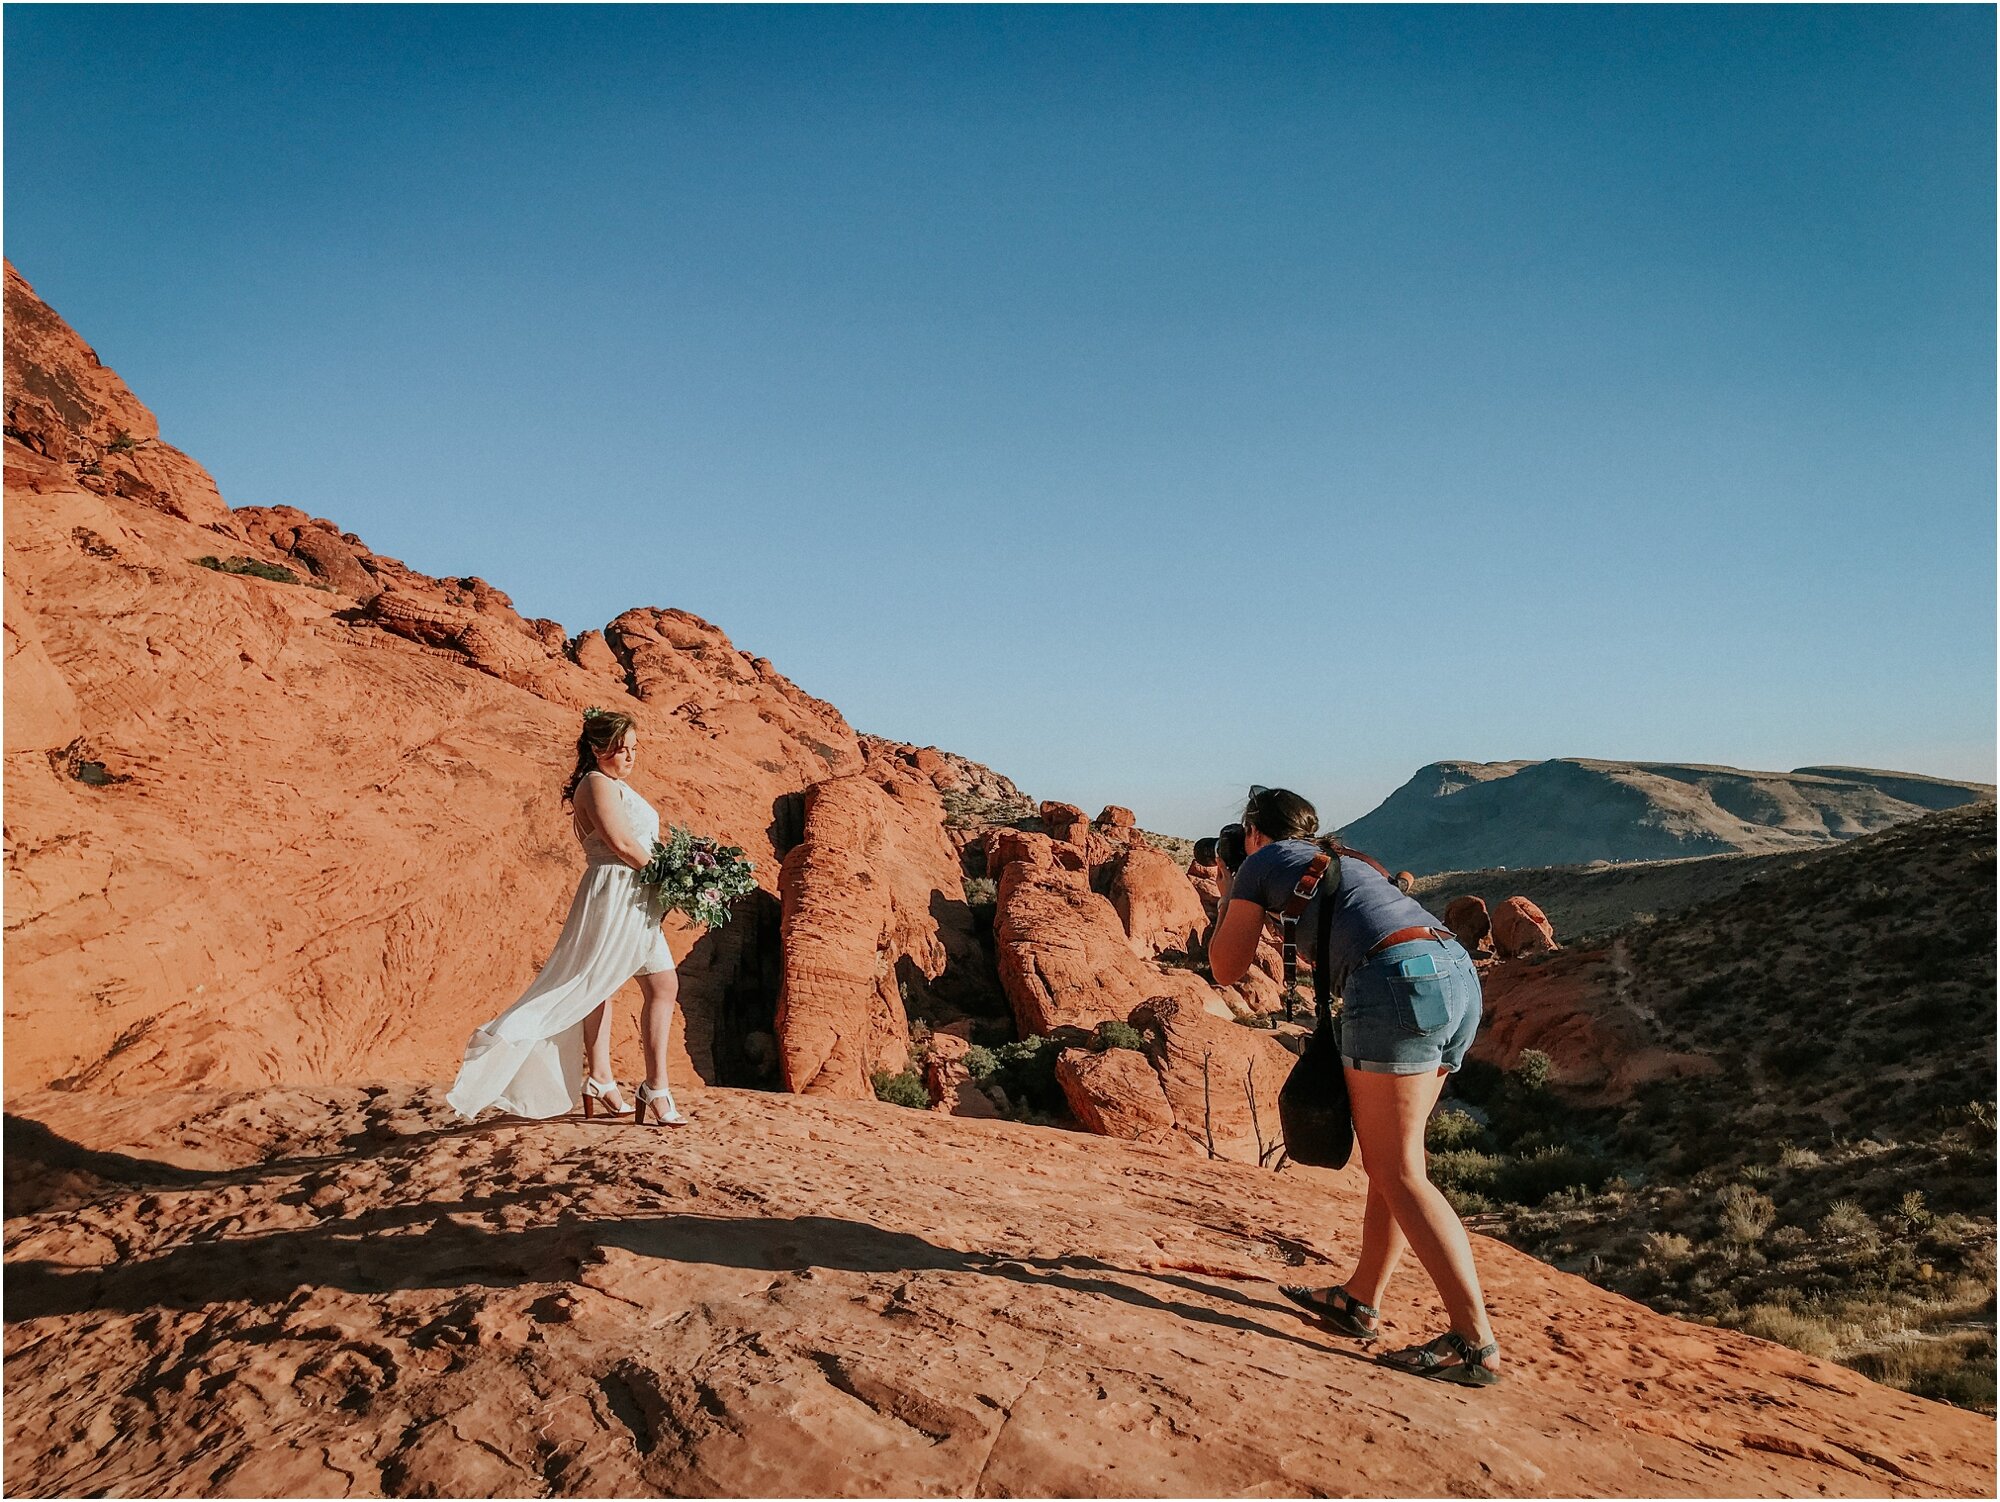   Elizabeth rocked her bridal session in the desert!   Photo: Sarah Cline  